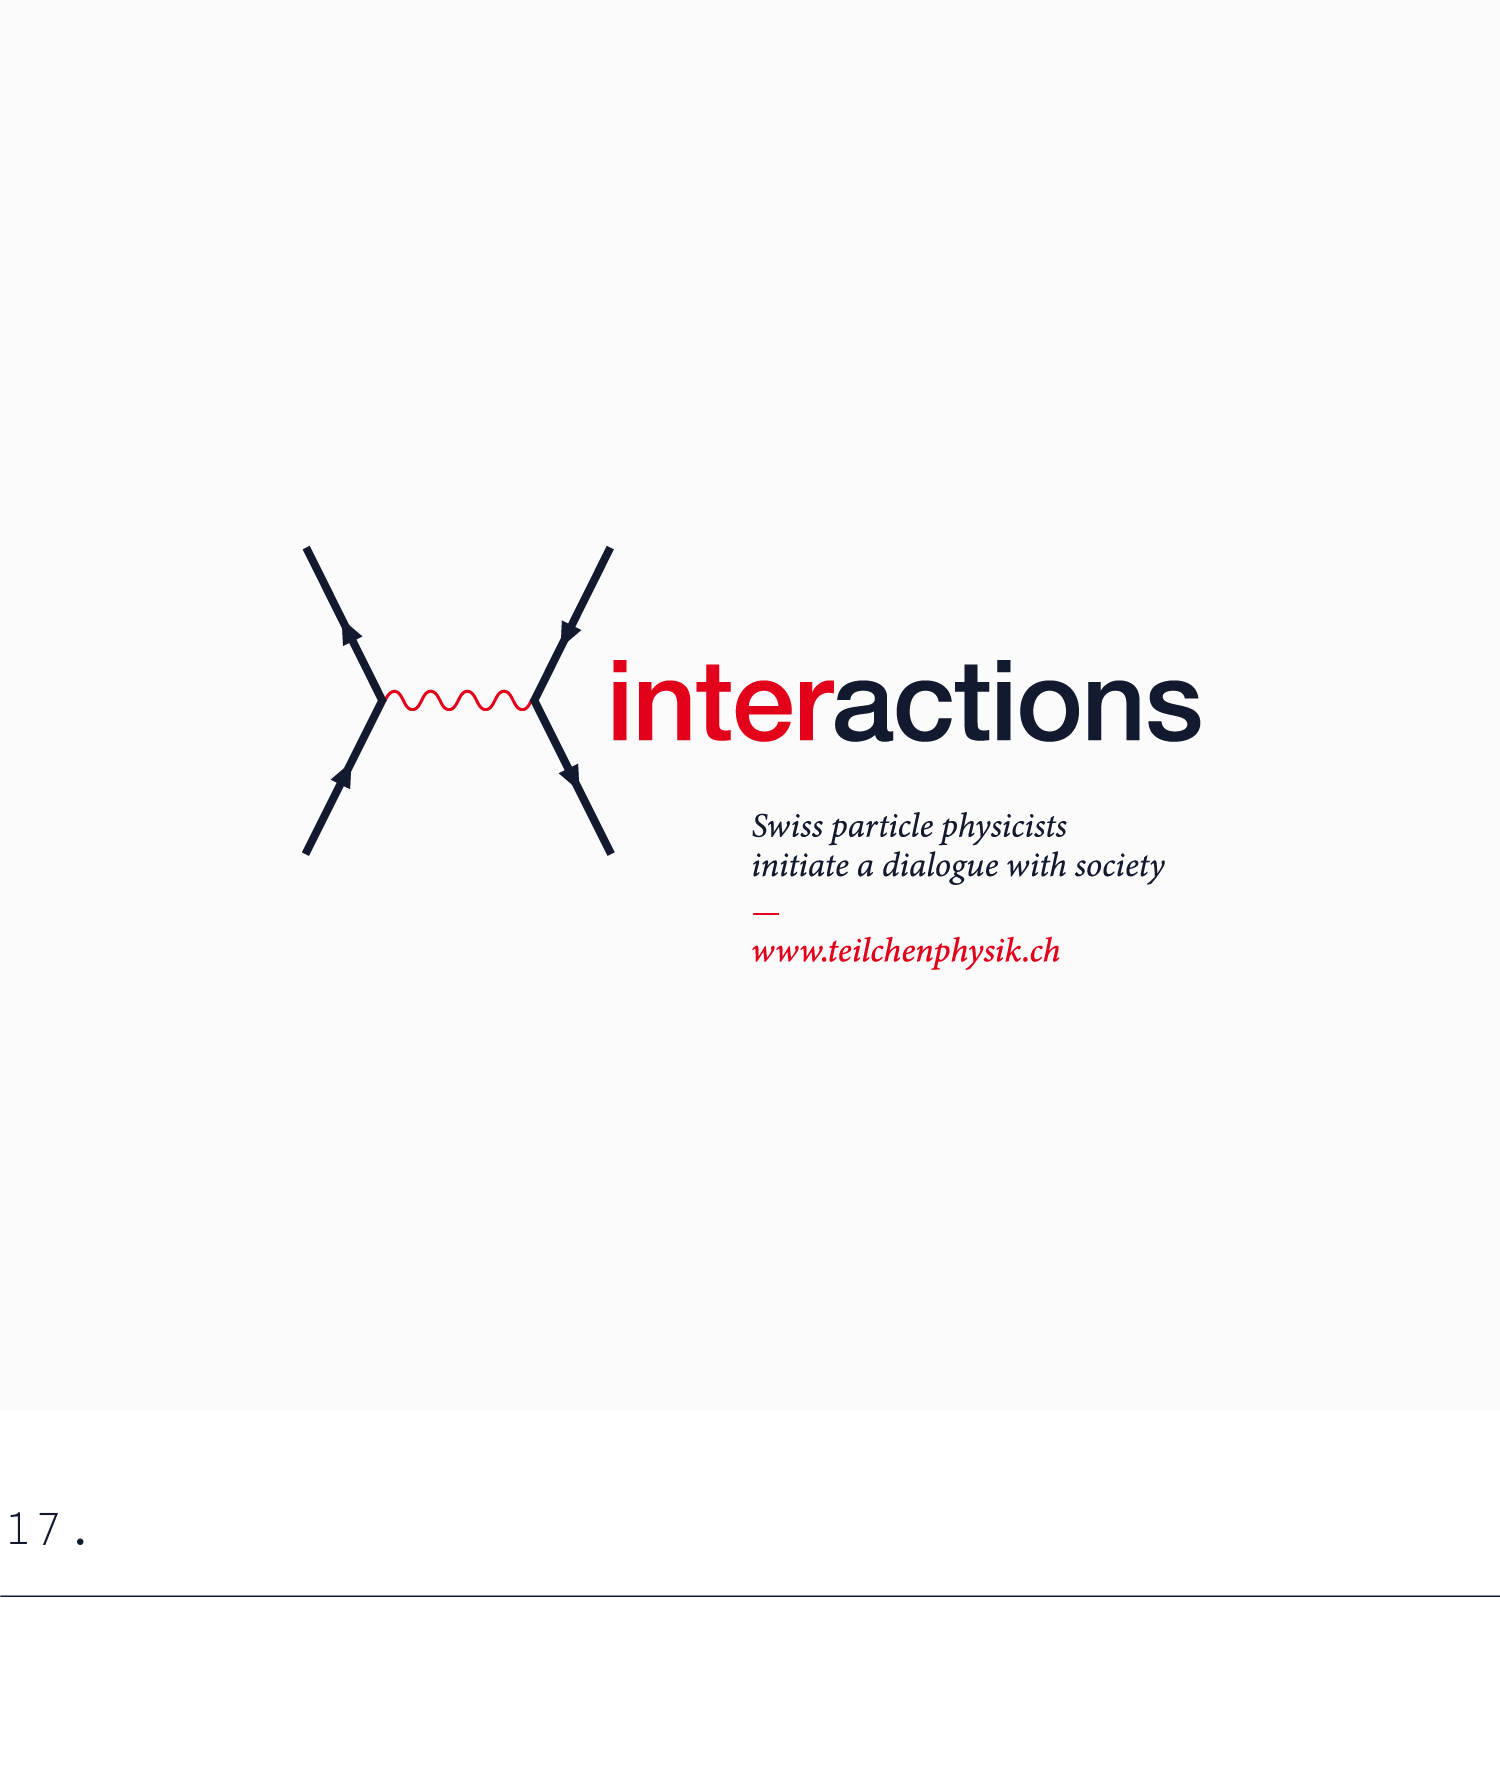 Interactions Logo